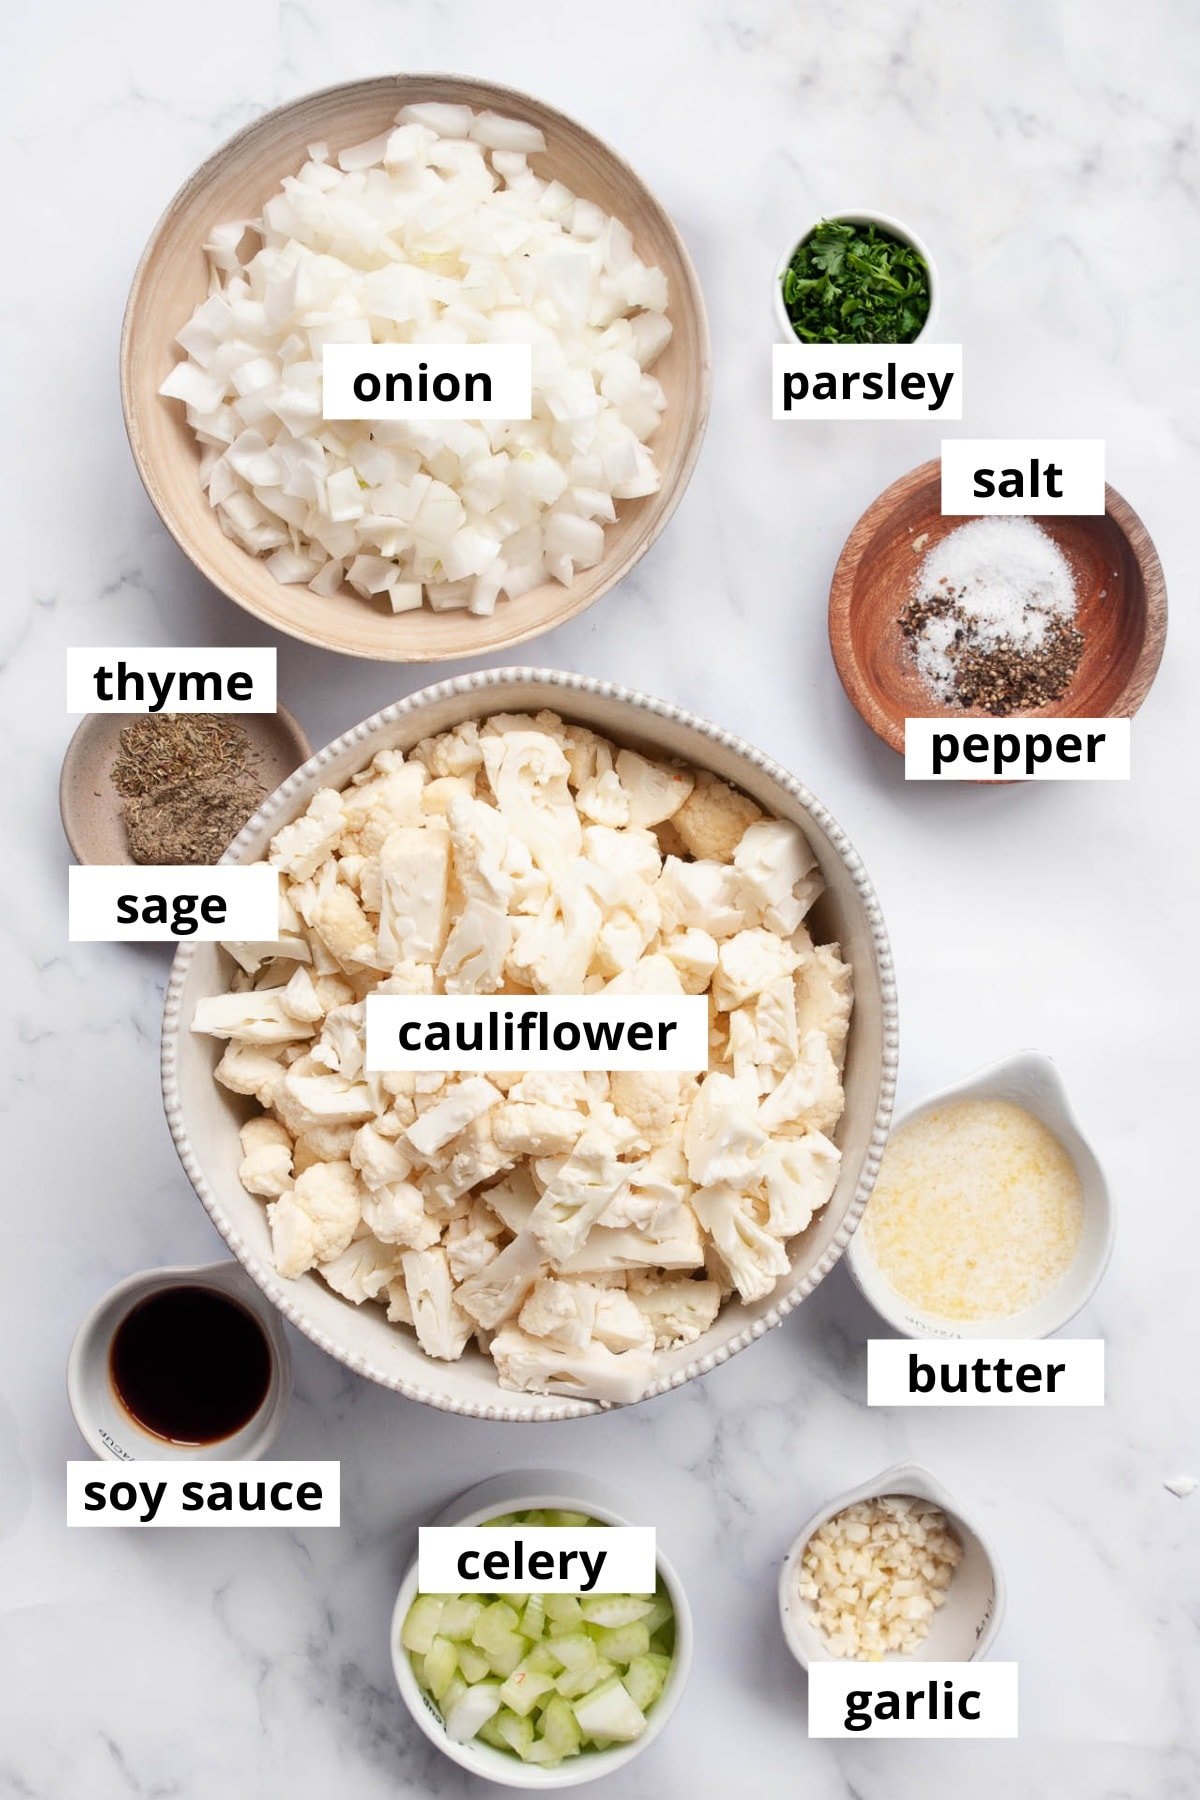 Cauliflower, onion, butter, celery, garlic, thyme, sage, salt, pepper, parsley, soy sauce.